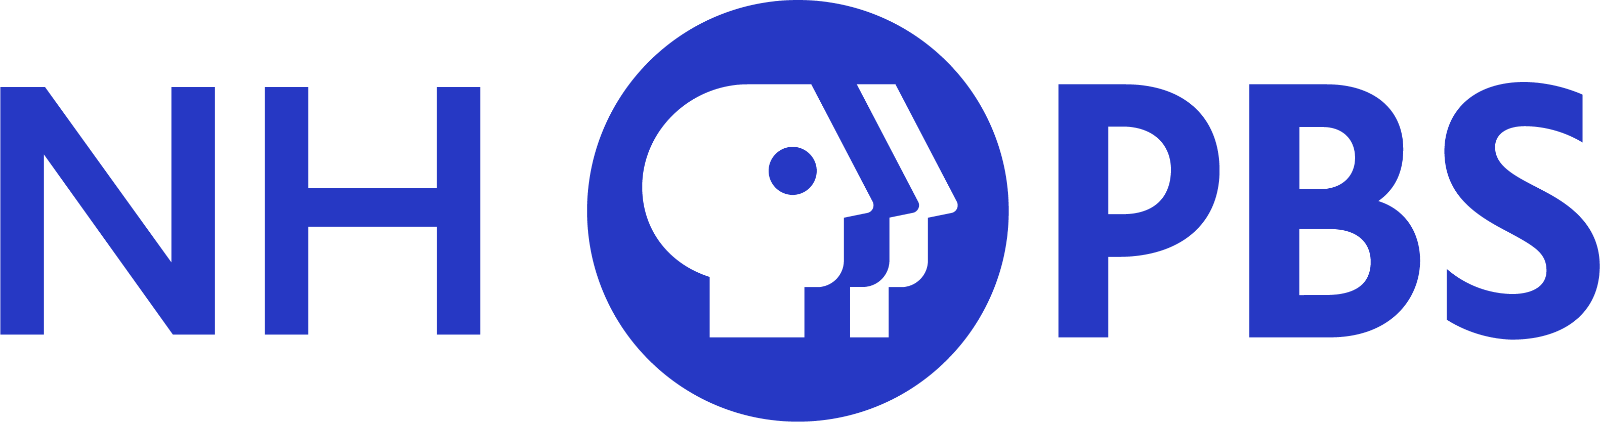 nh-pbs-logo-2020-rgb.png